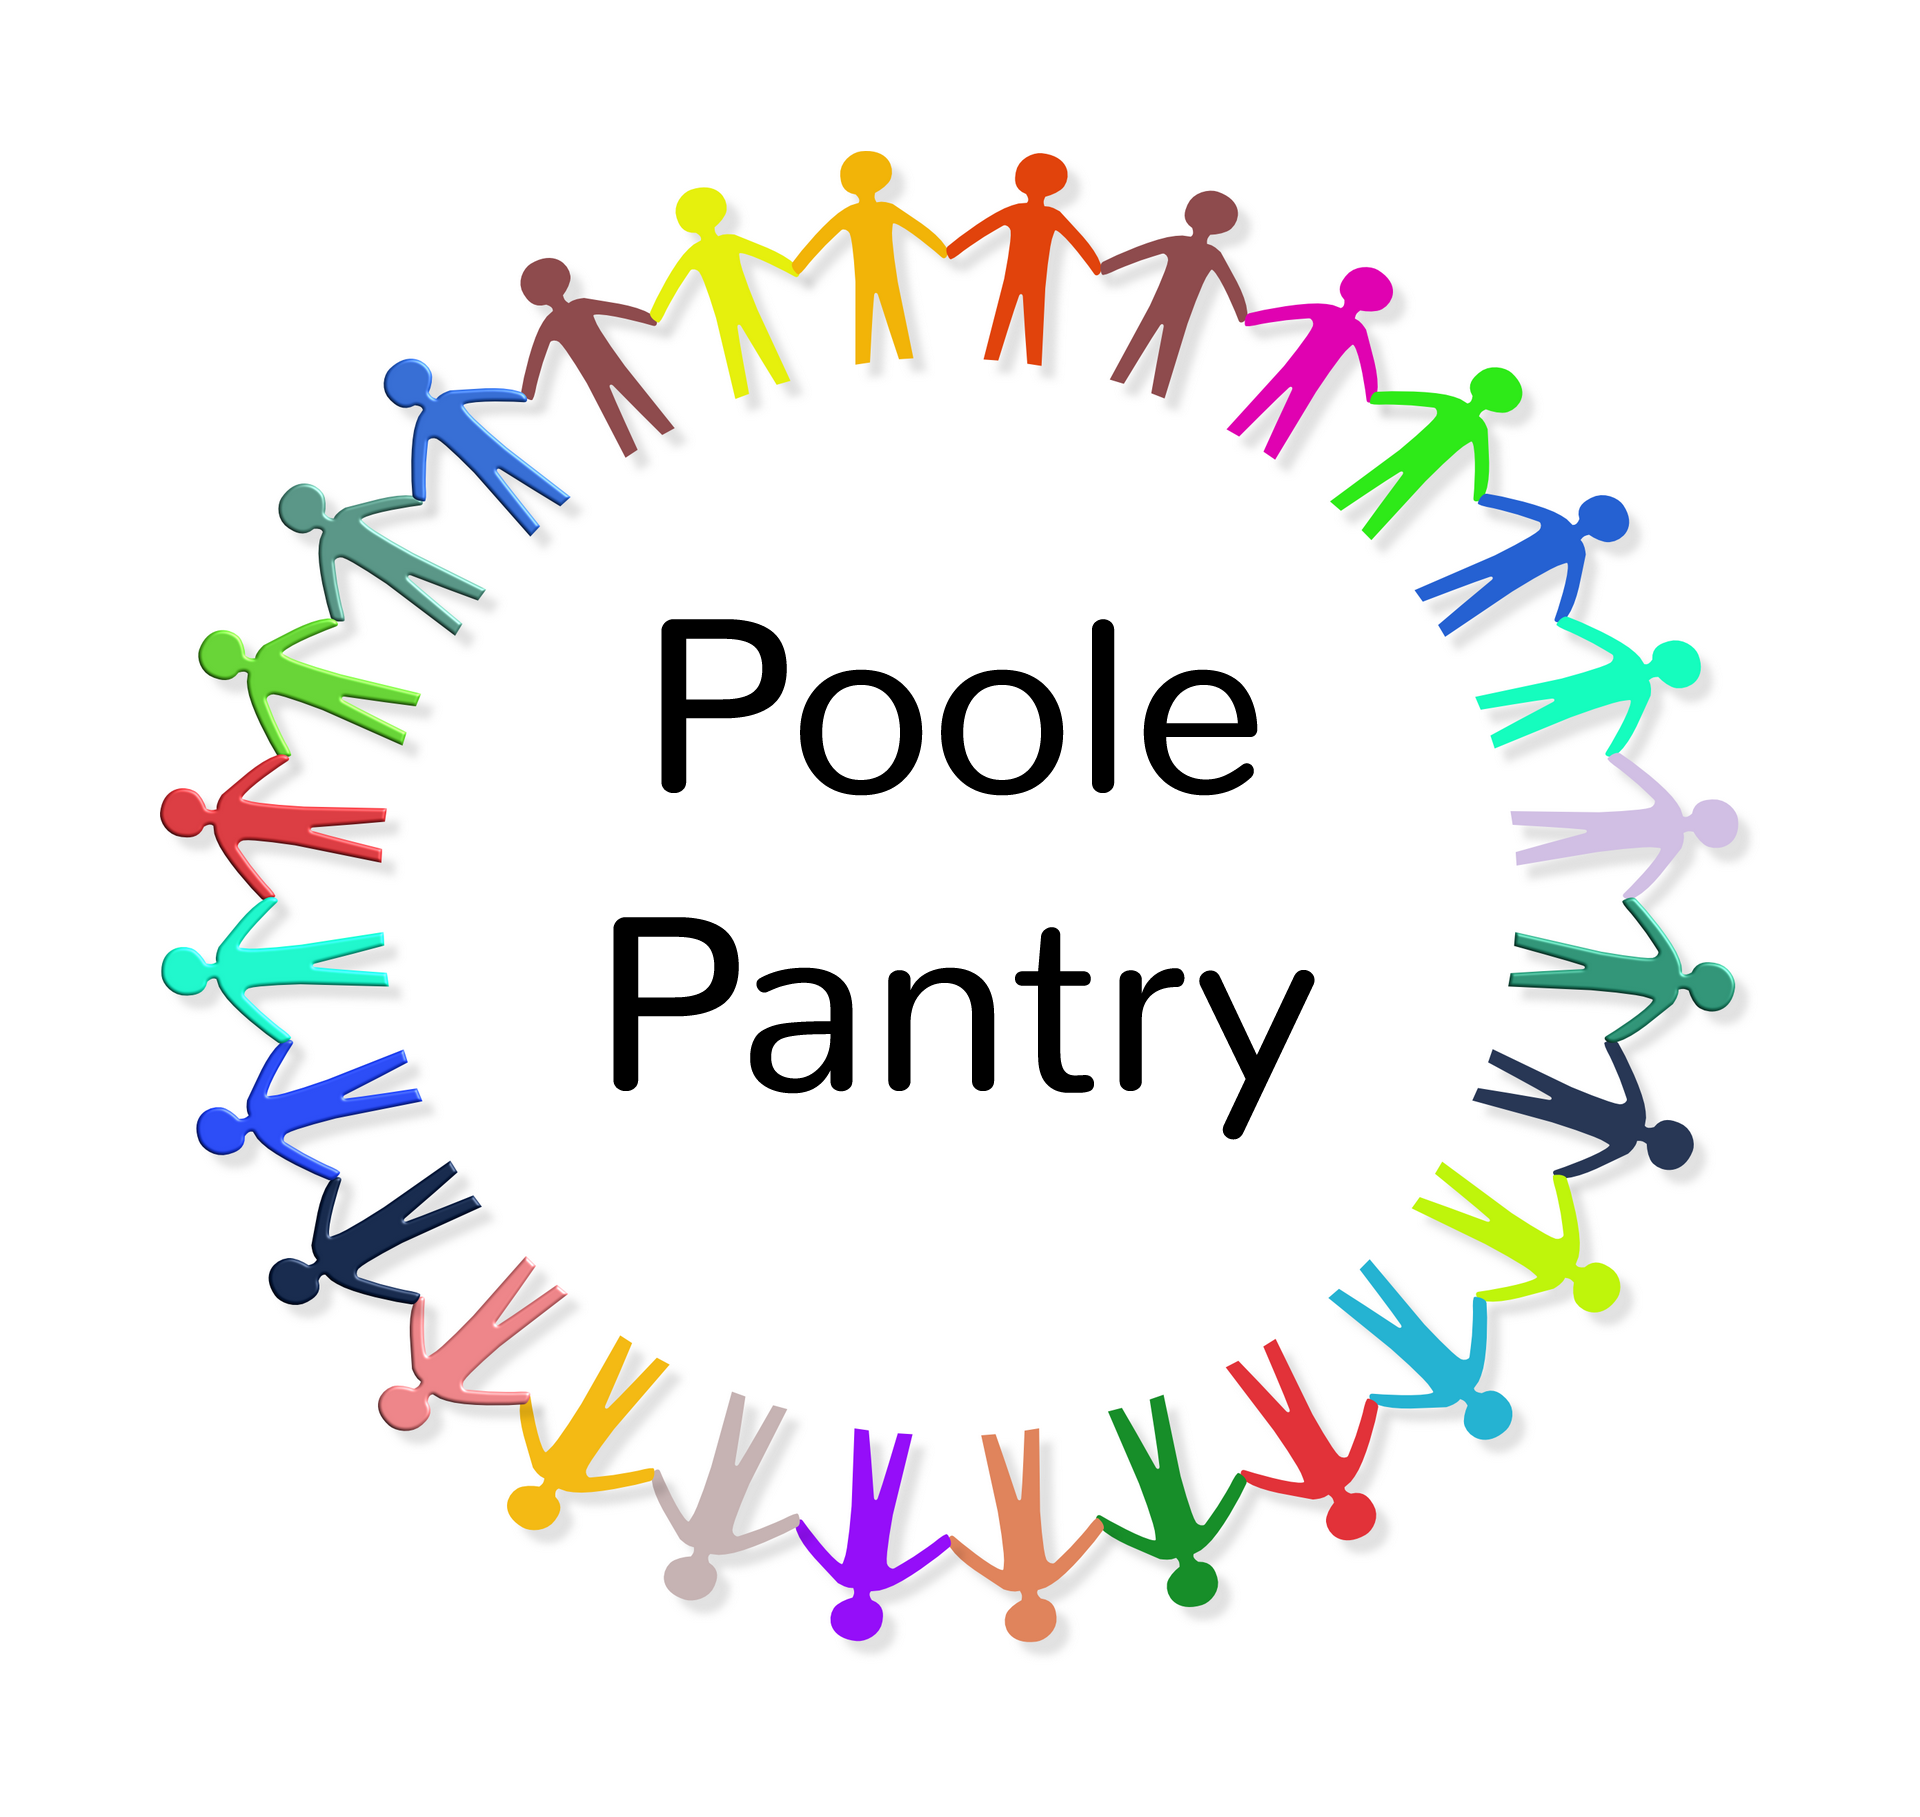 Poole Pantry